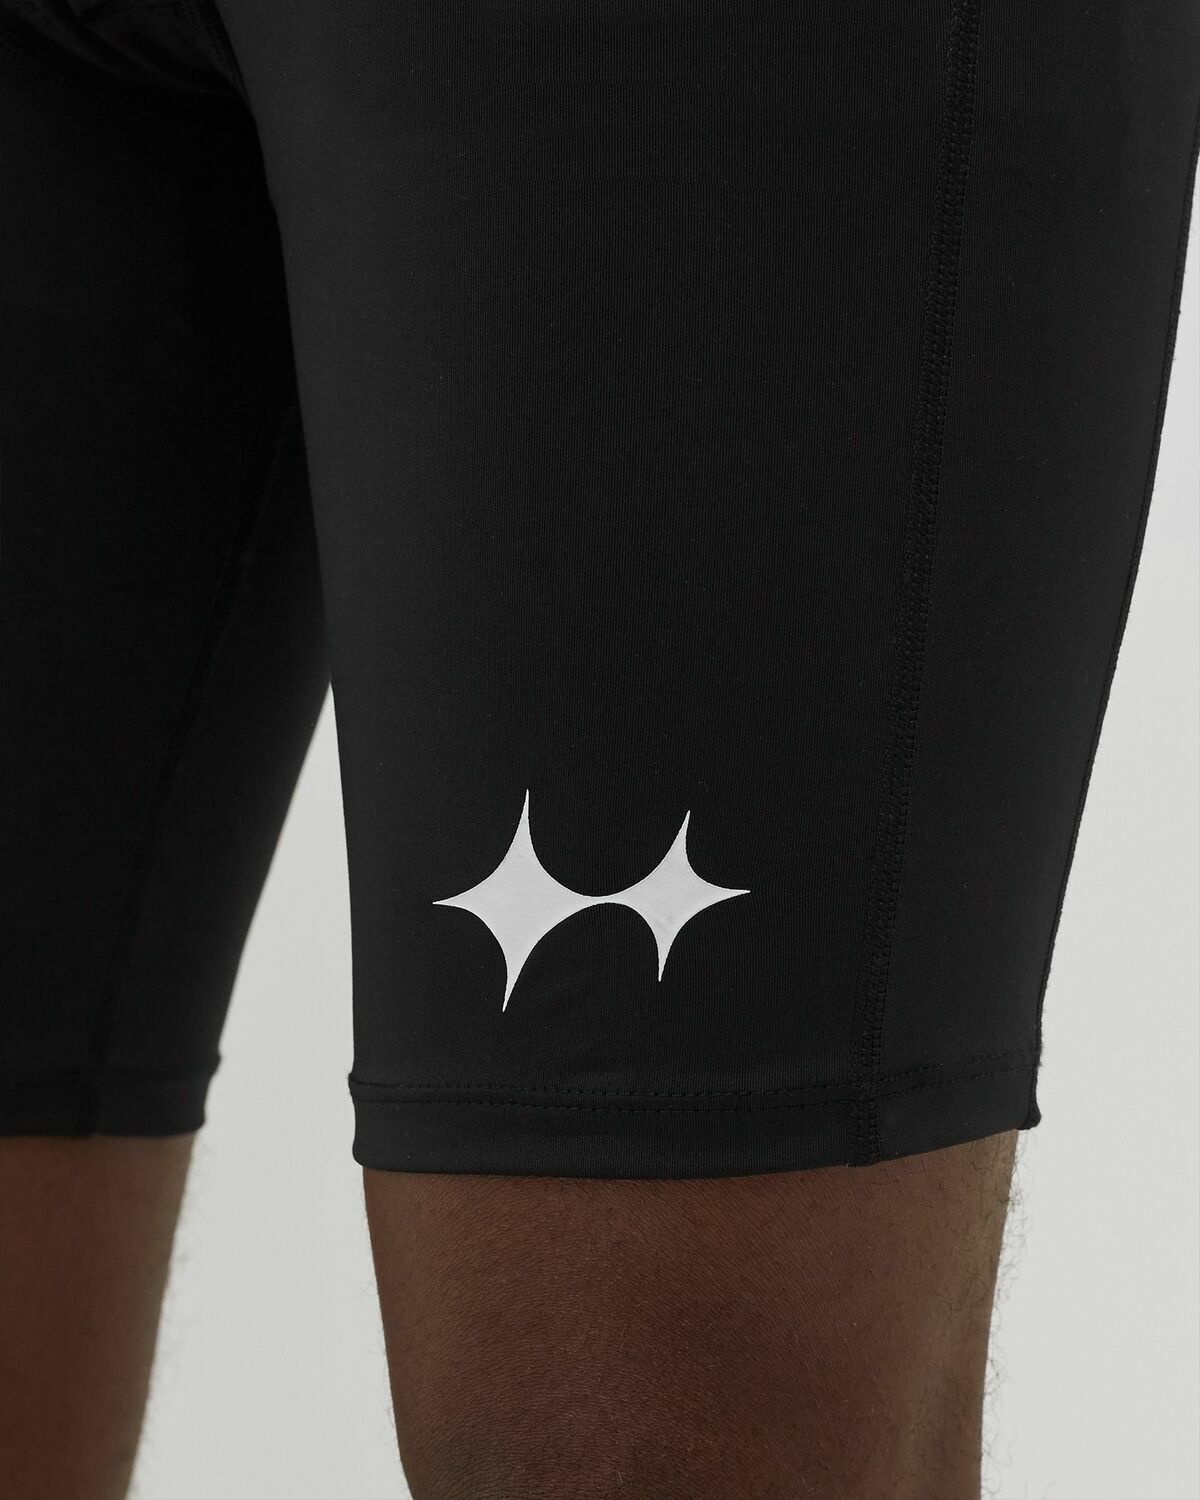 Bstn Brand Training Compression Shorts Black - Mens - Sport & Team Shorts